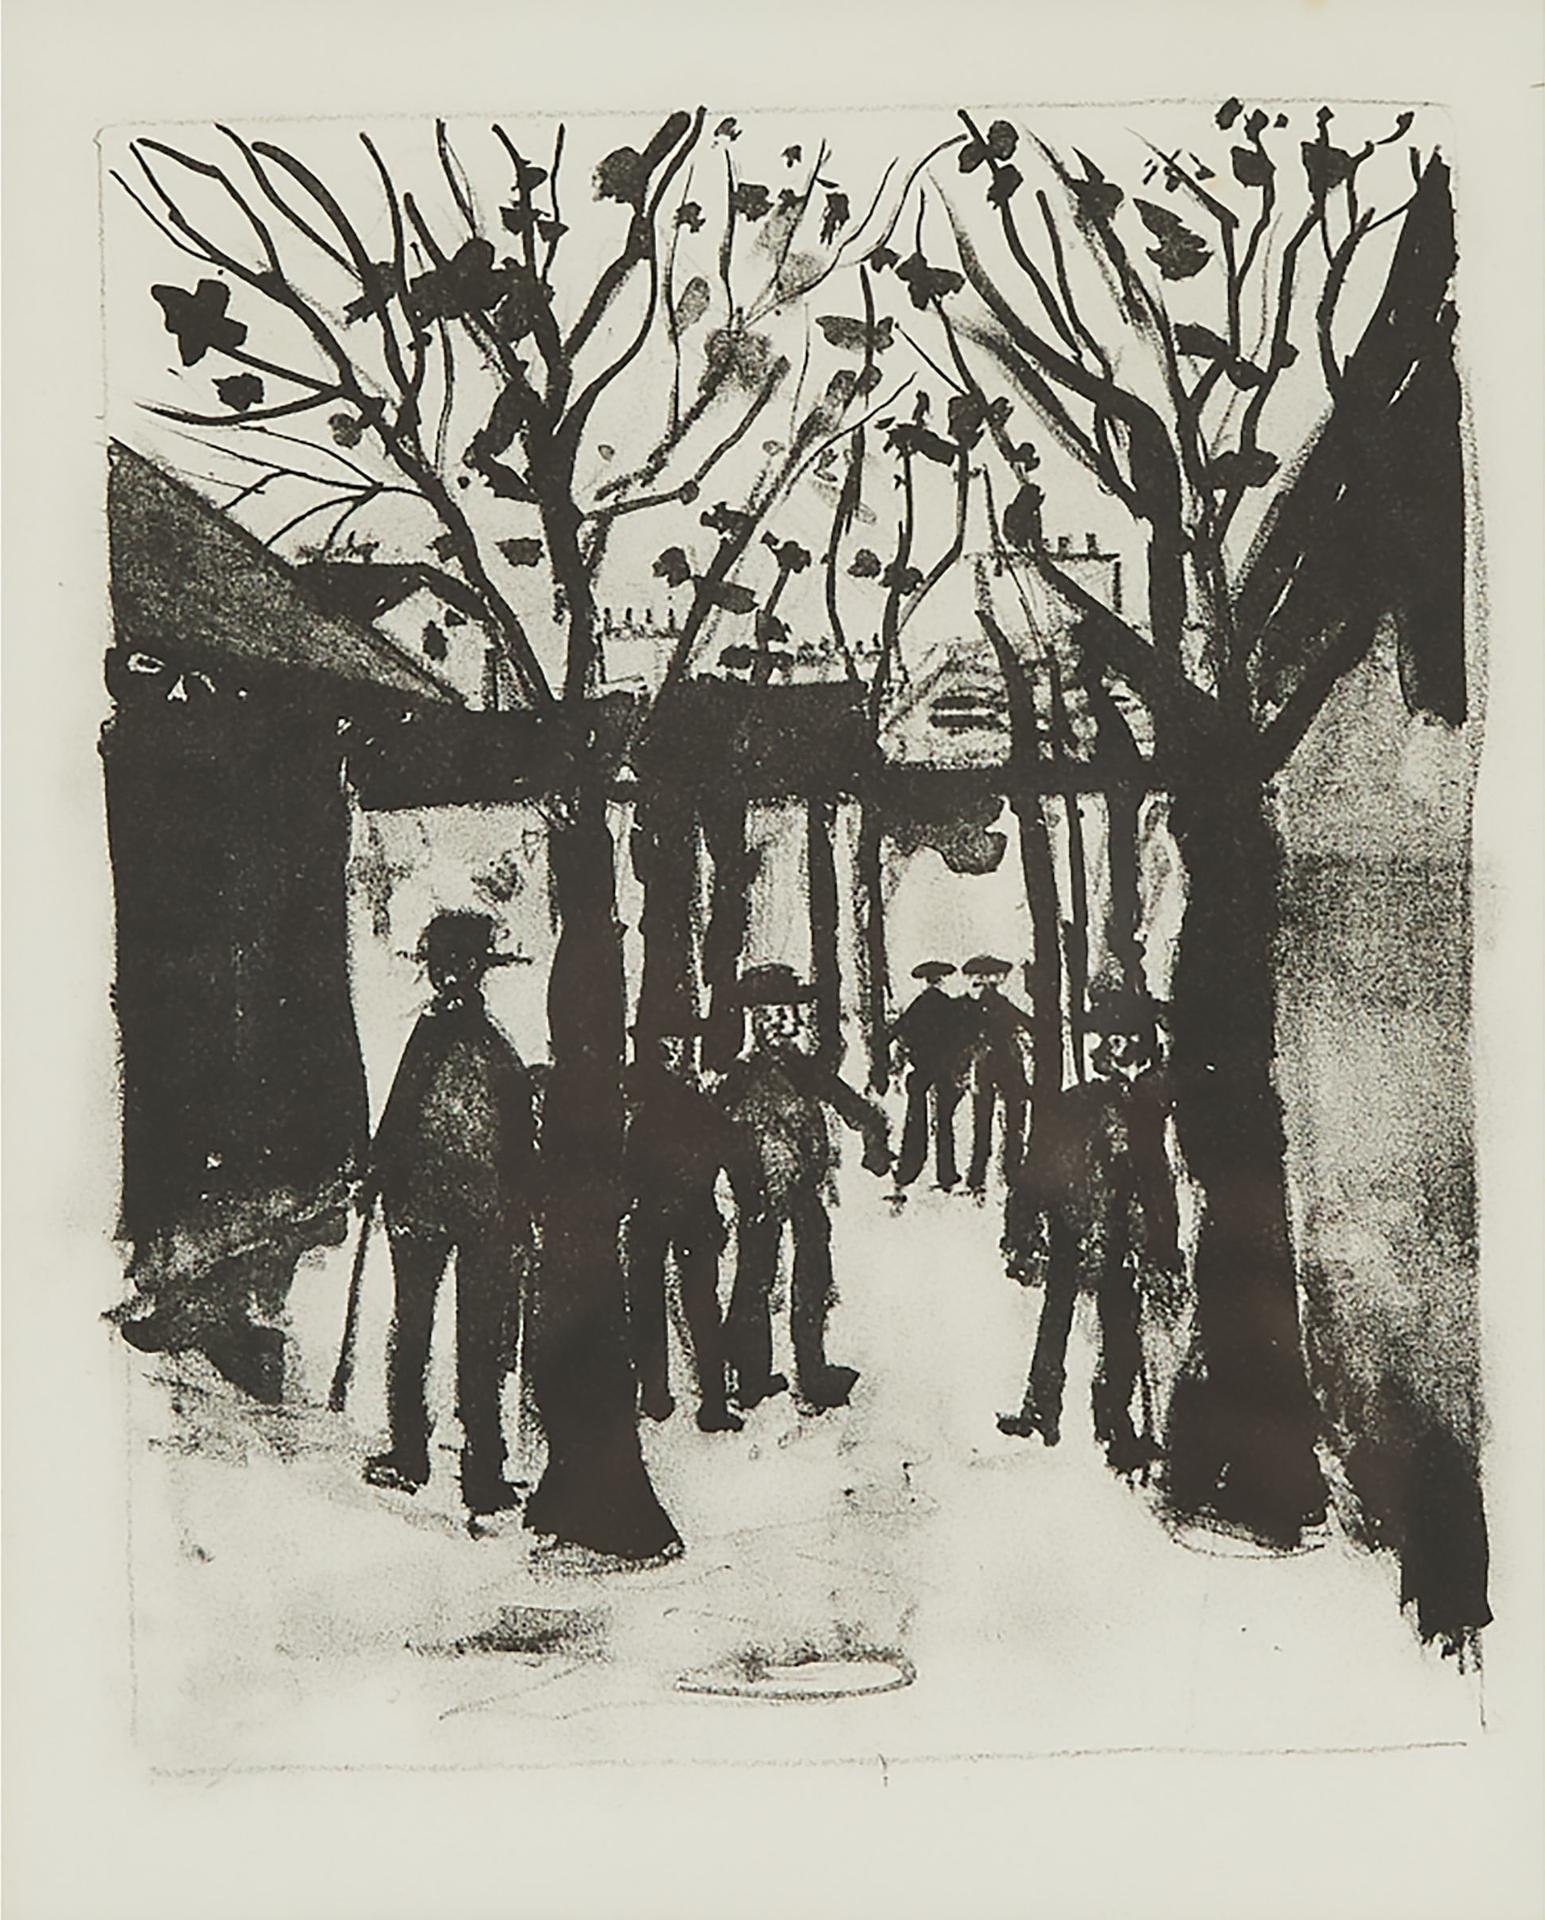 Maurice Utrillo (1883-1955) - At The Sidewalk (From La Légende De La Vie D'utrillo), 1927/28